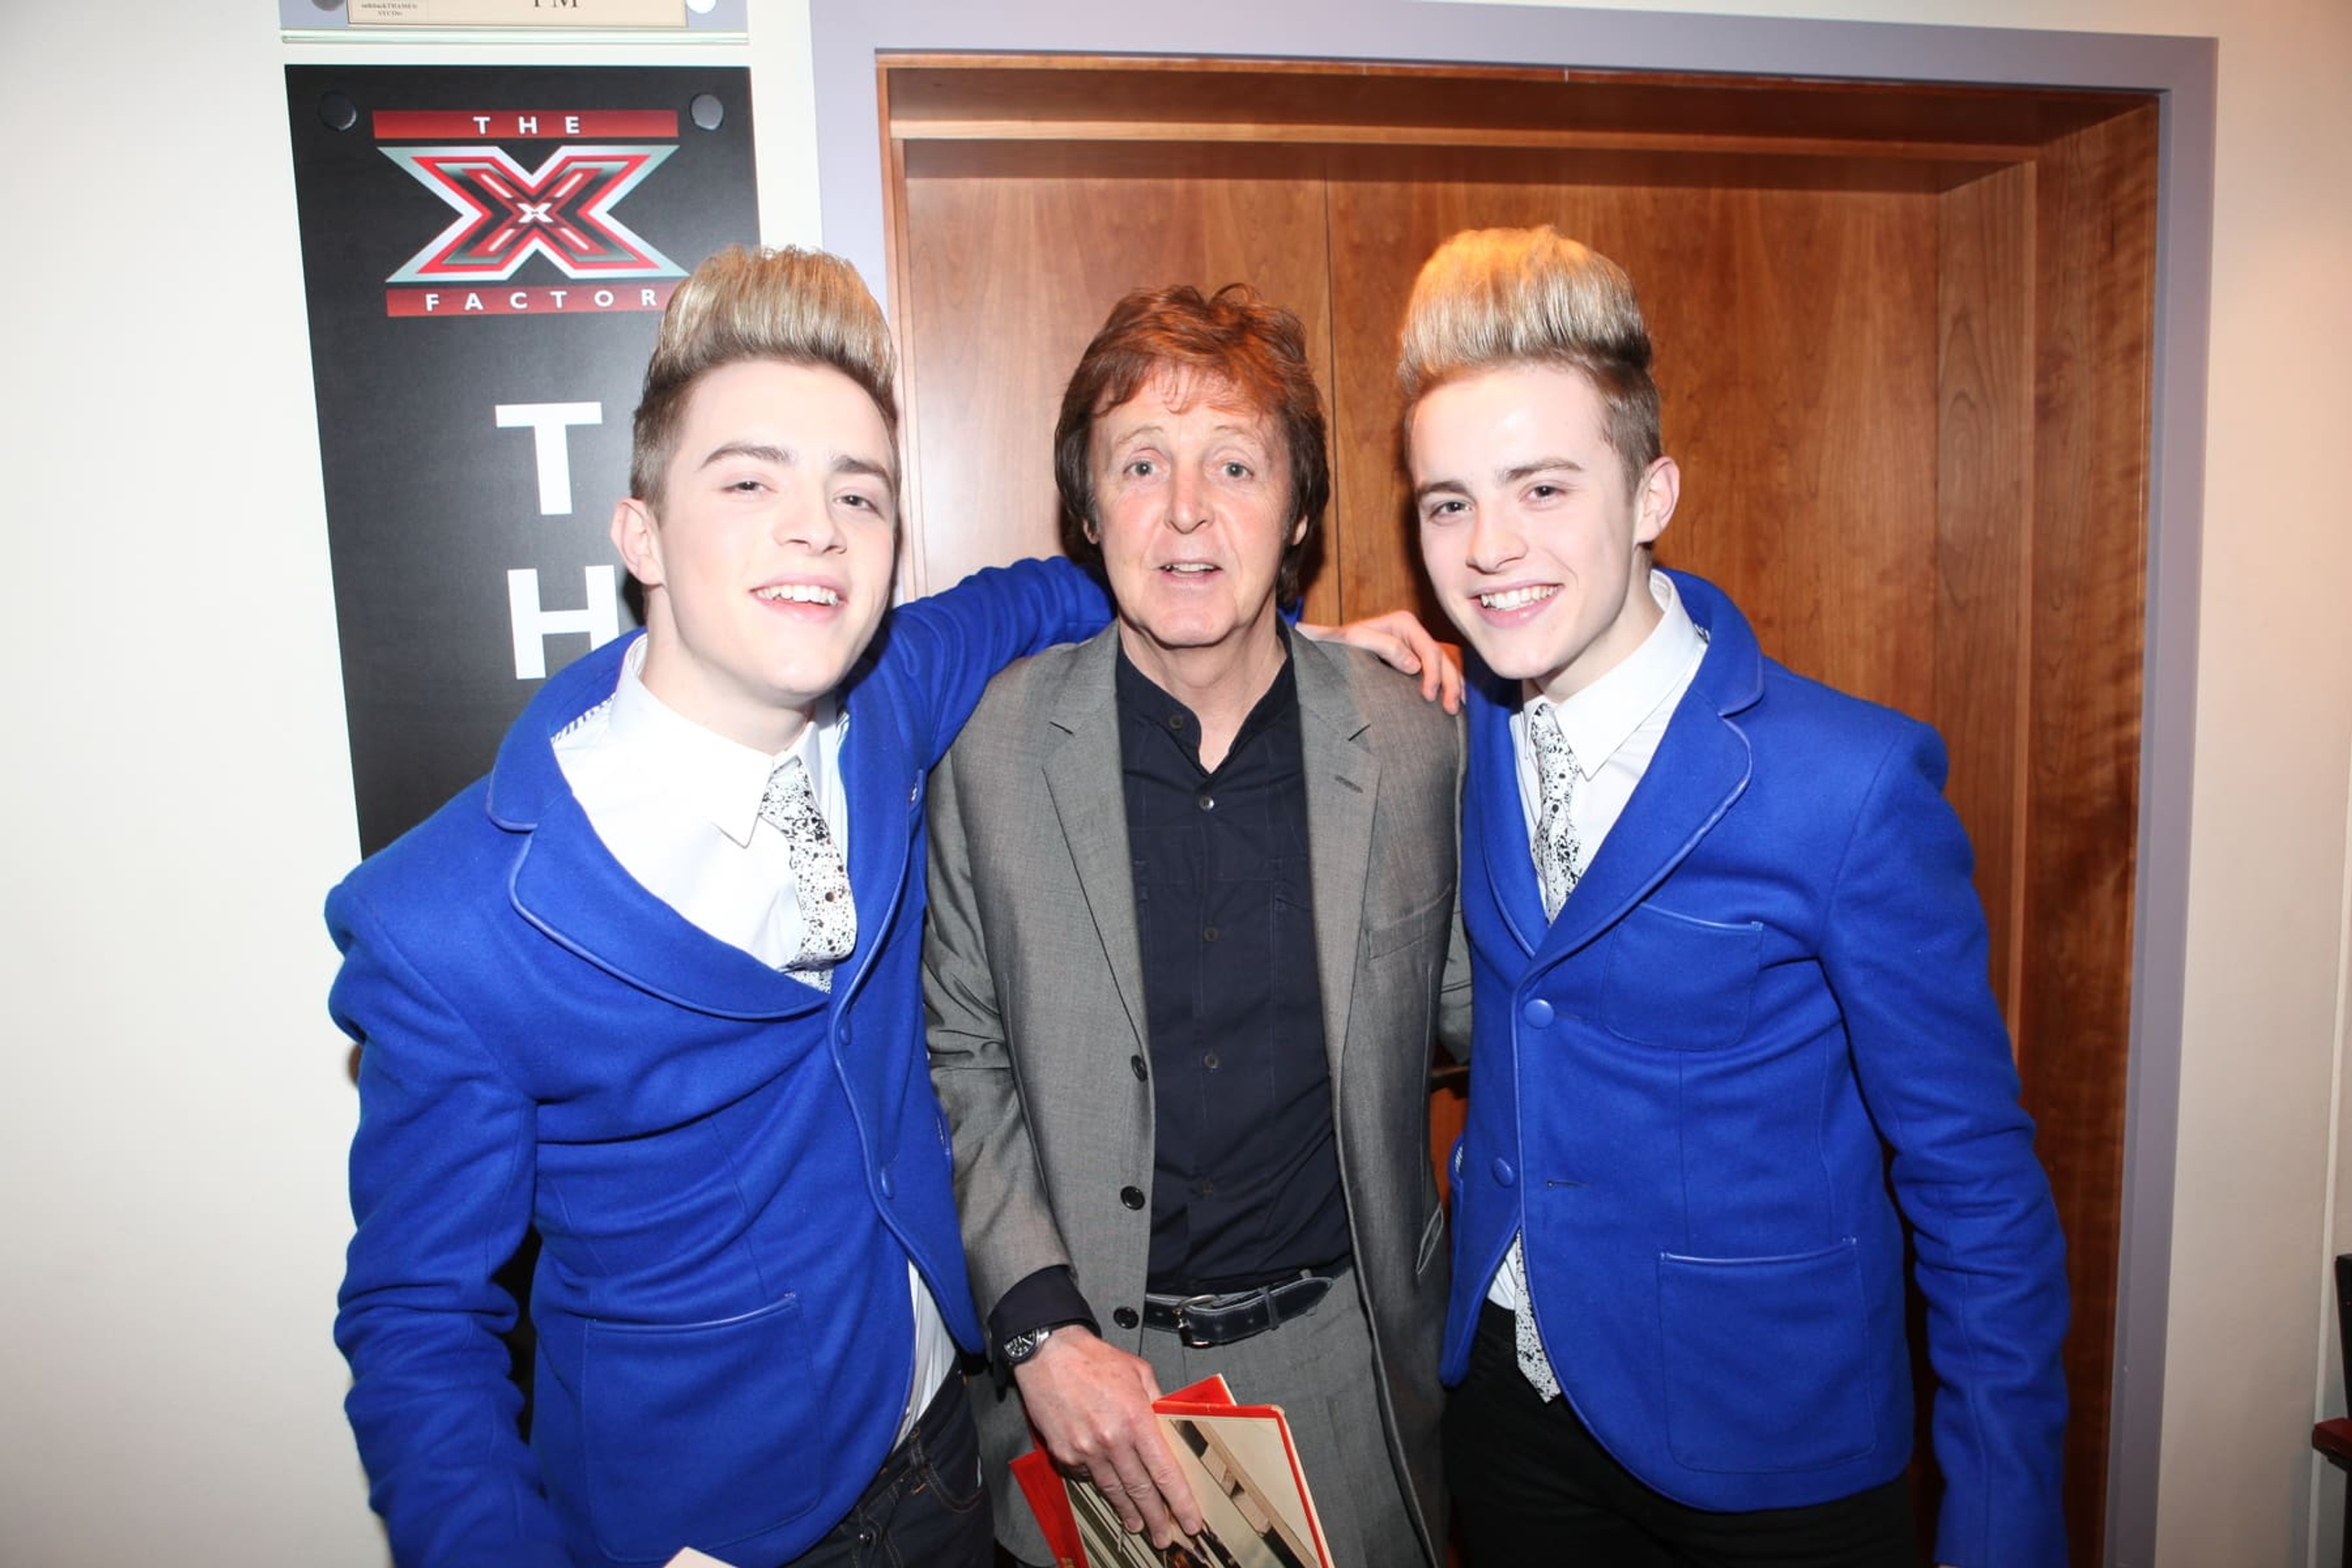 Paul standing in between twin X Factor contestants Jedward